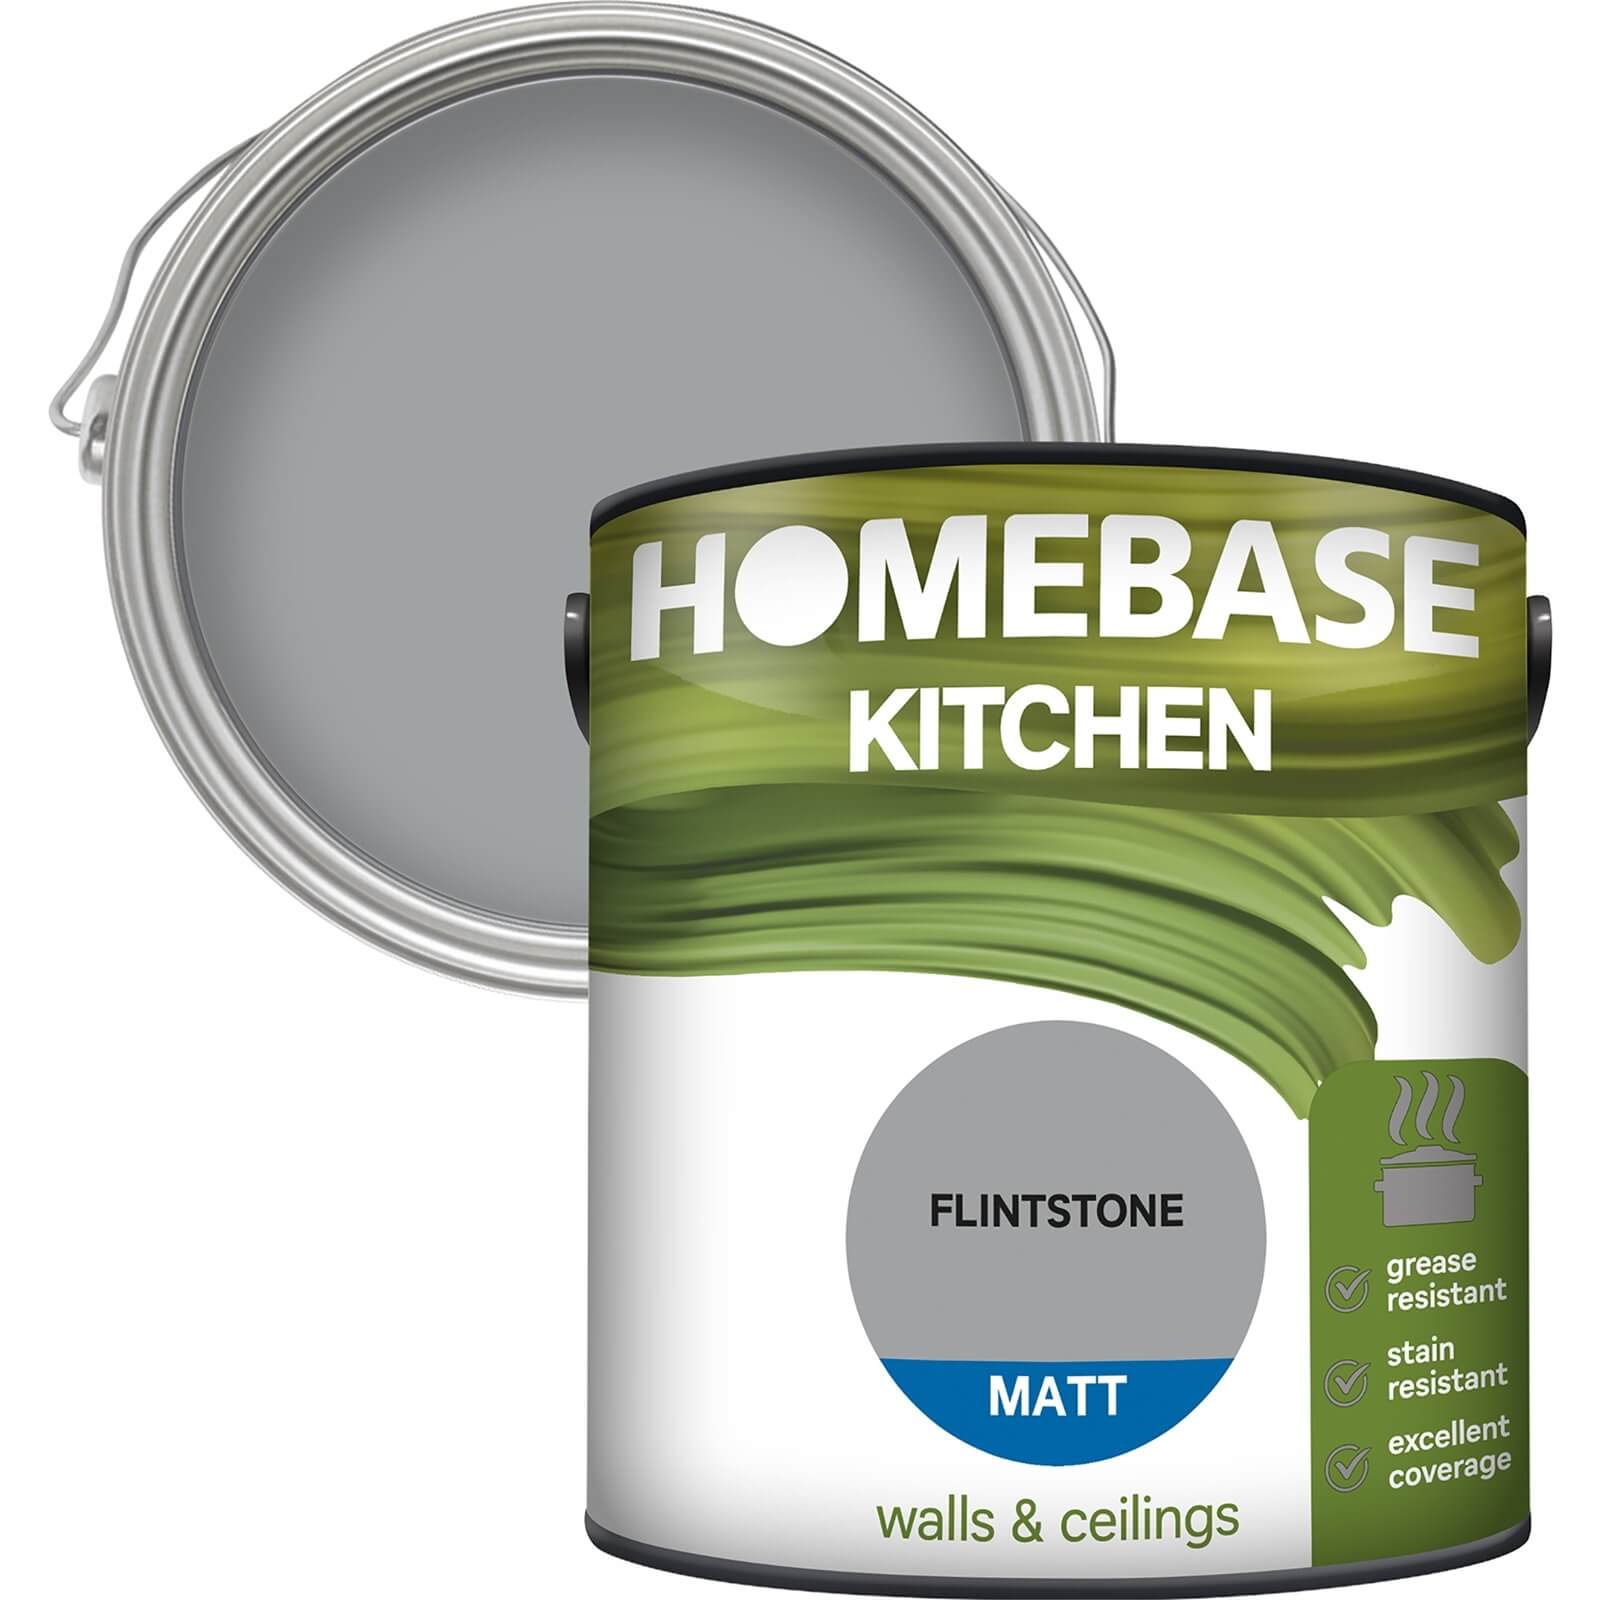 Homebase Kitchen Matt Paint - Flintstone 2.5L